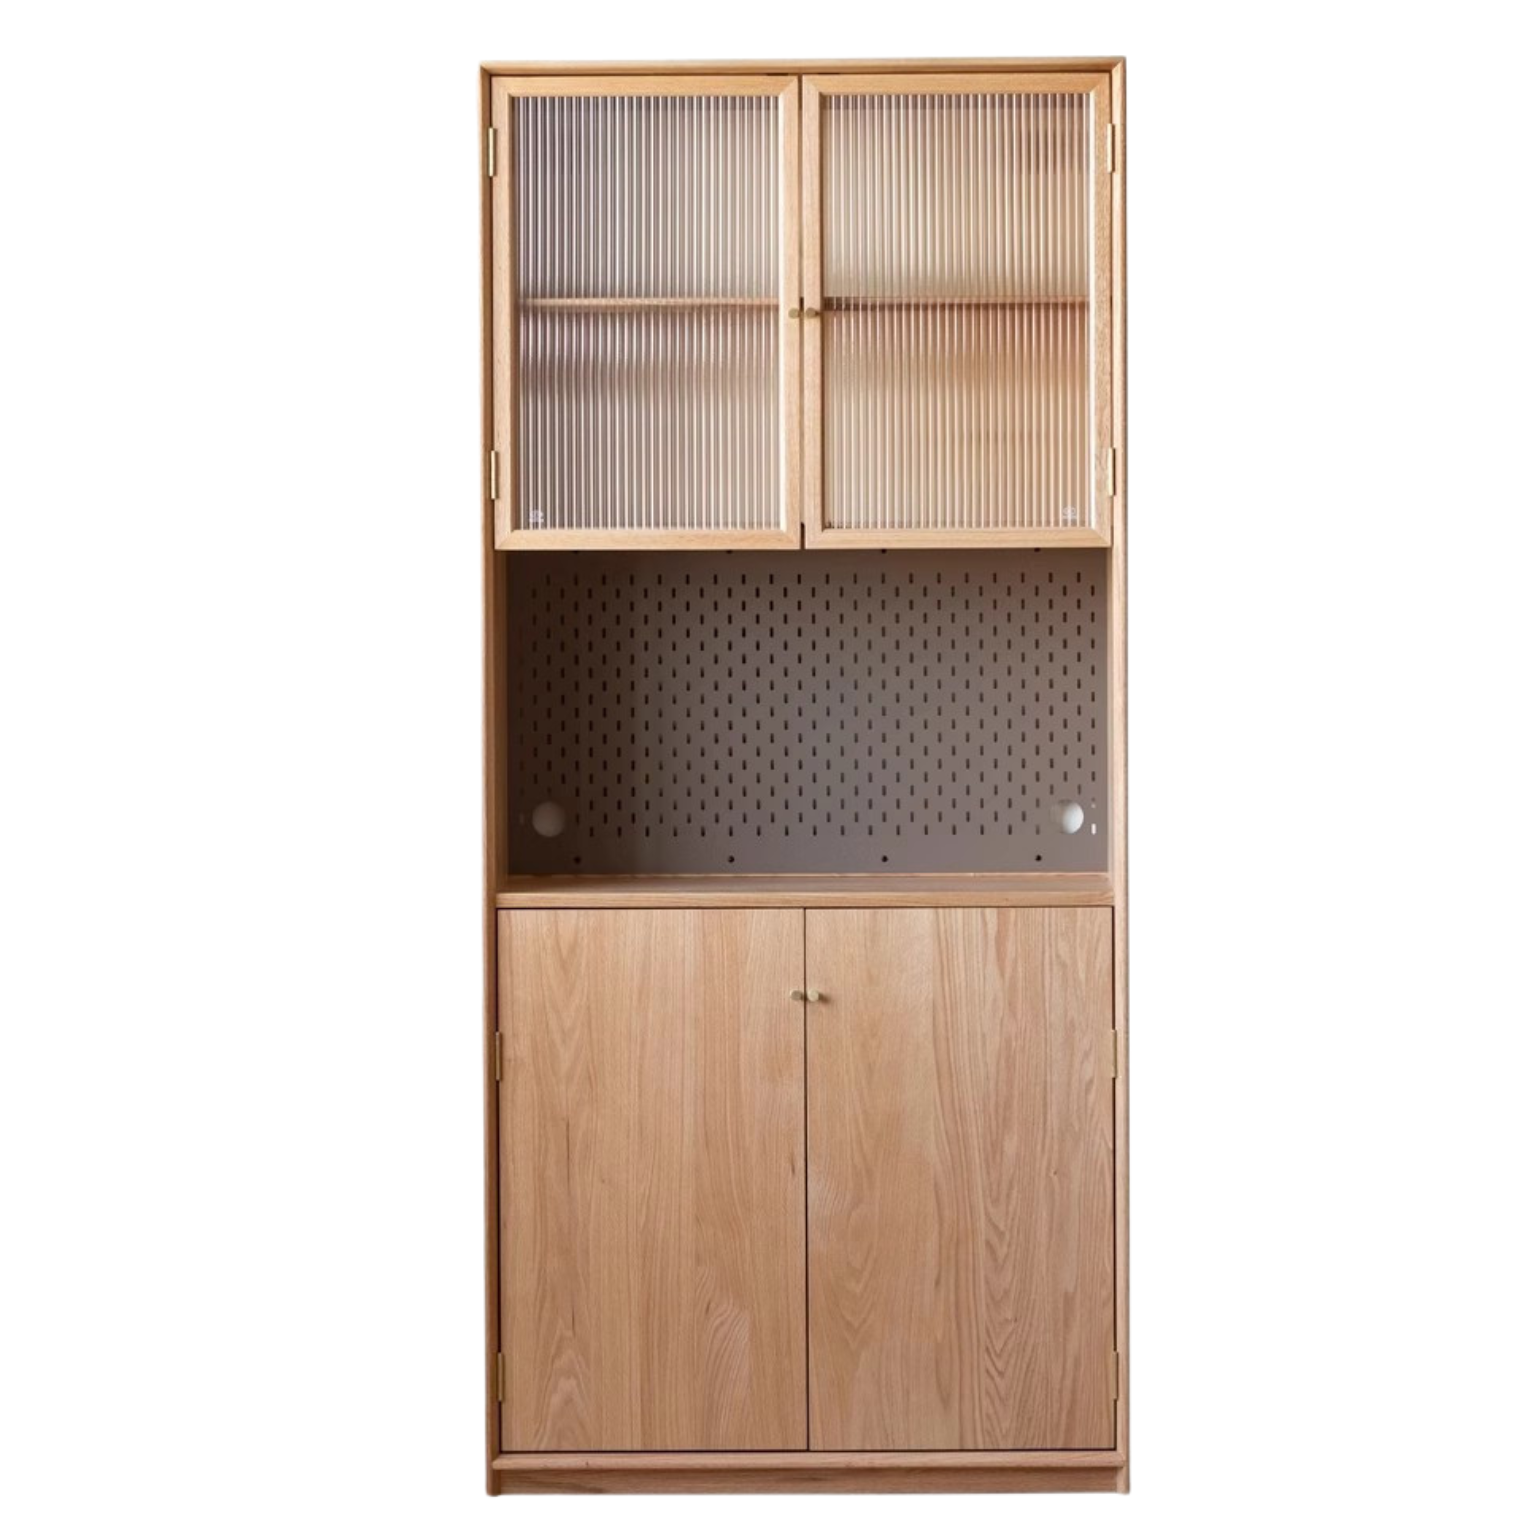 Oak solid wood combination wall bookcase bookshelf -